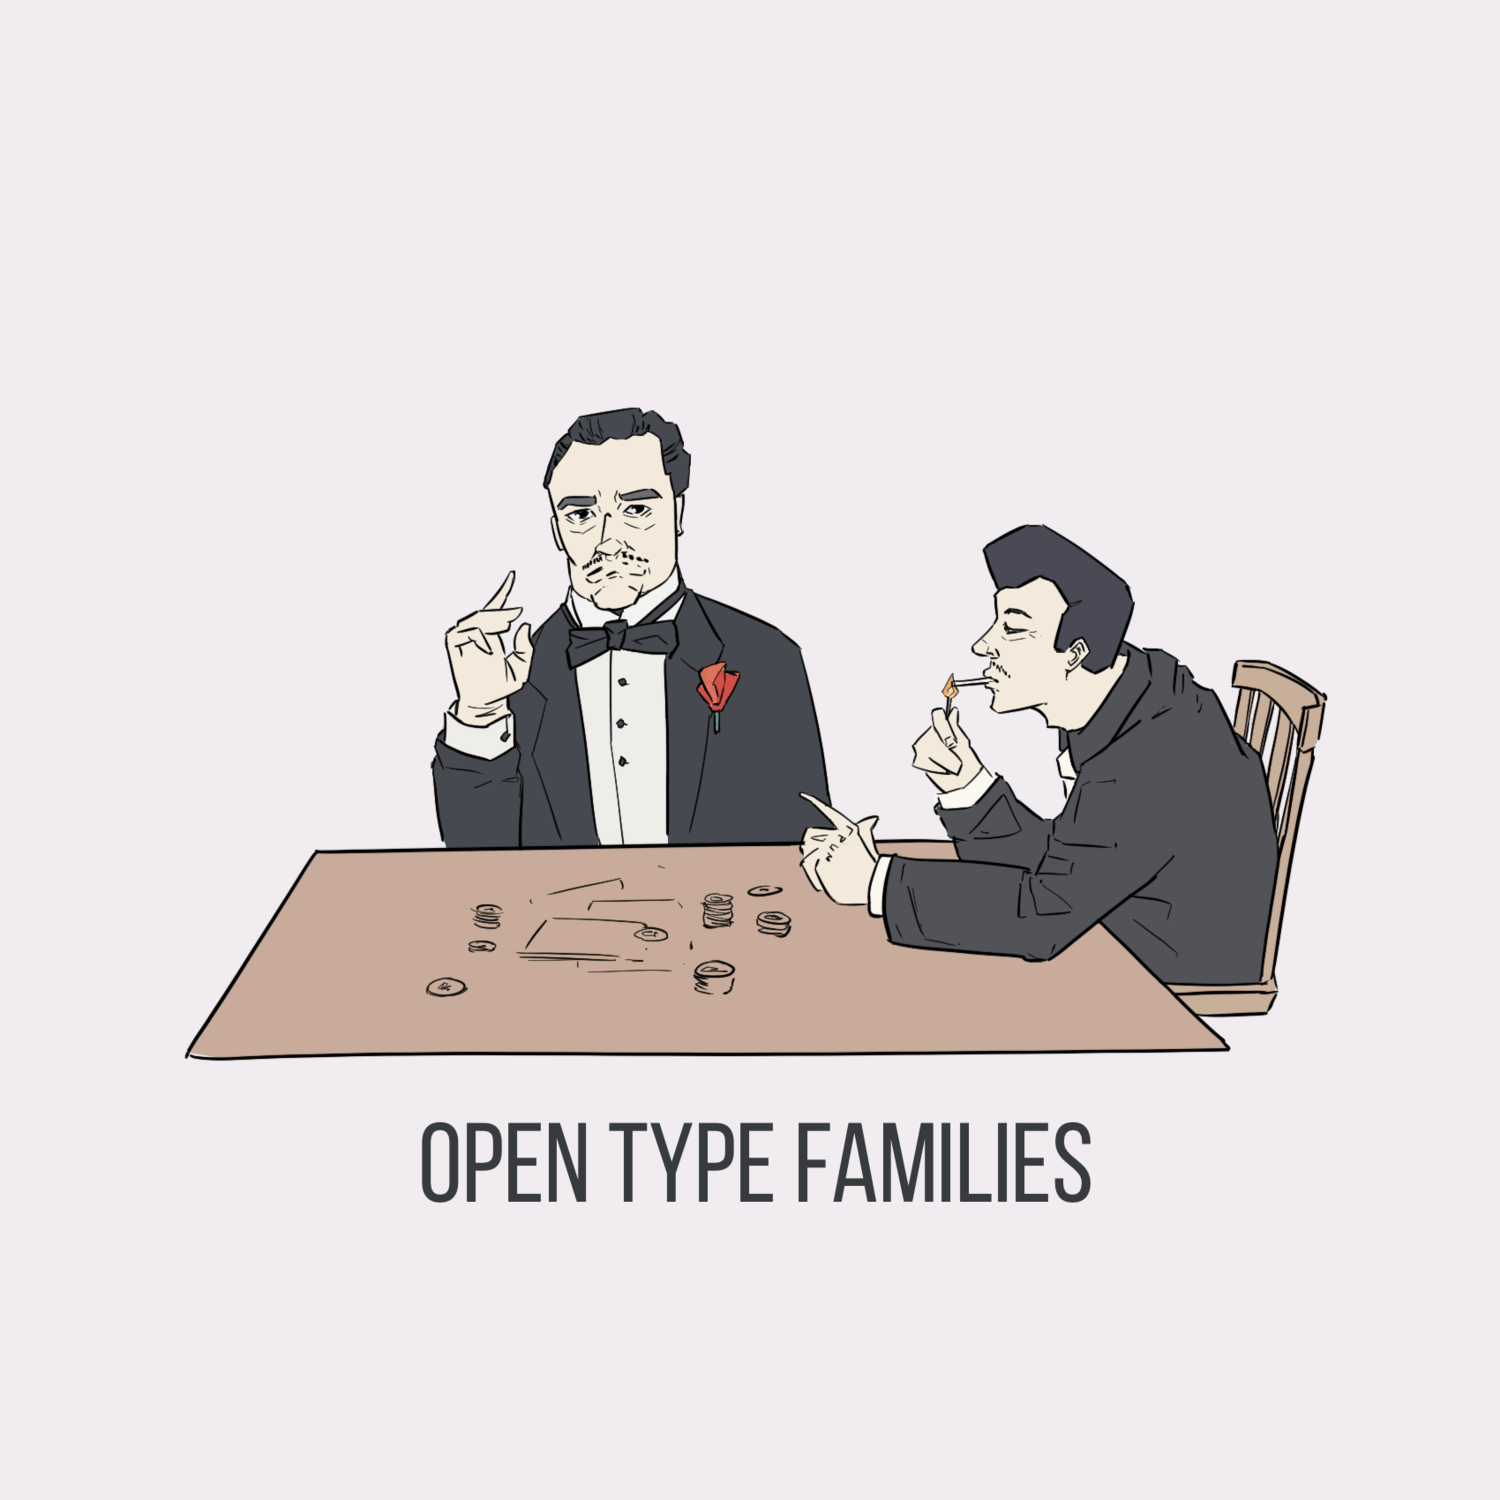 Open type families